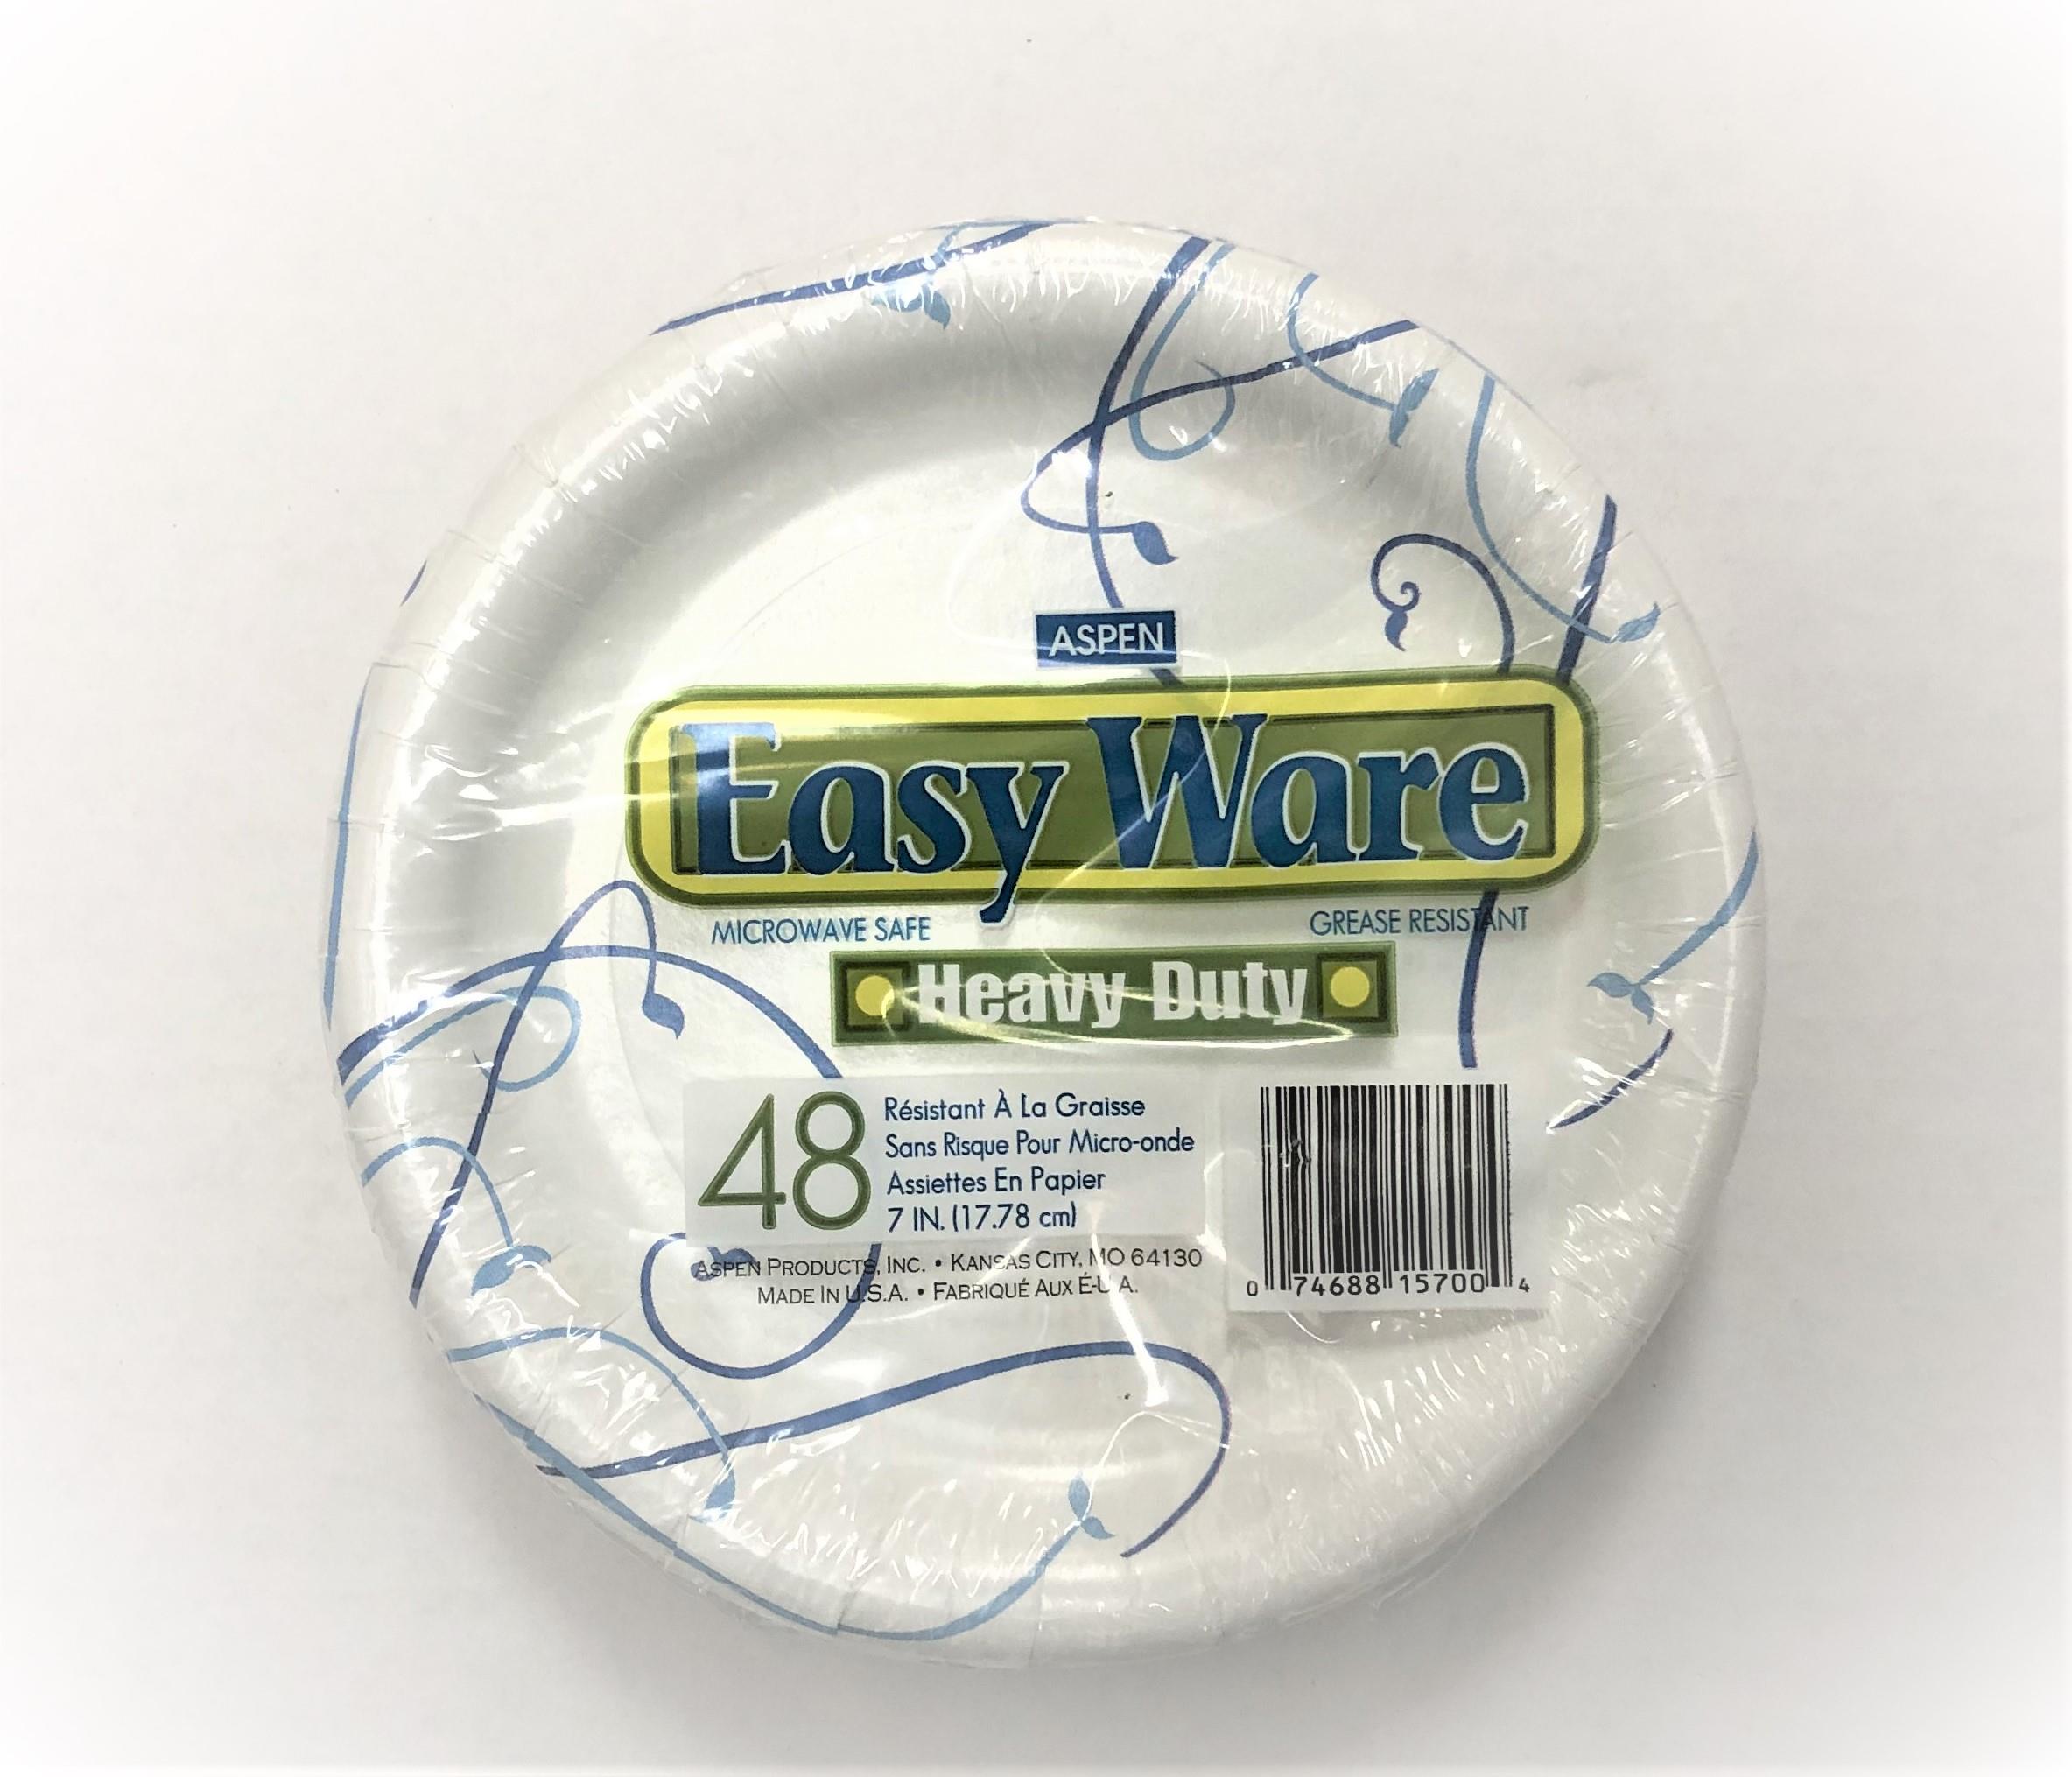 Soak Proof Tableware, Foam Plates, 8.88 dia, White, 100/Pack -  mastersupplyonline